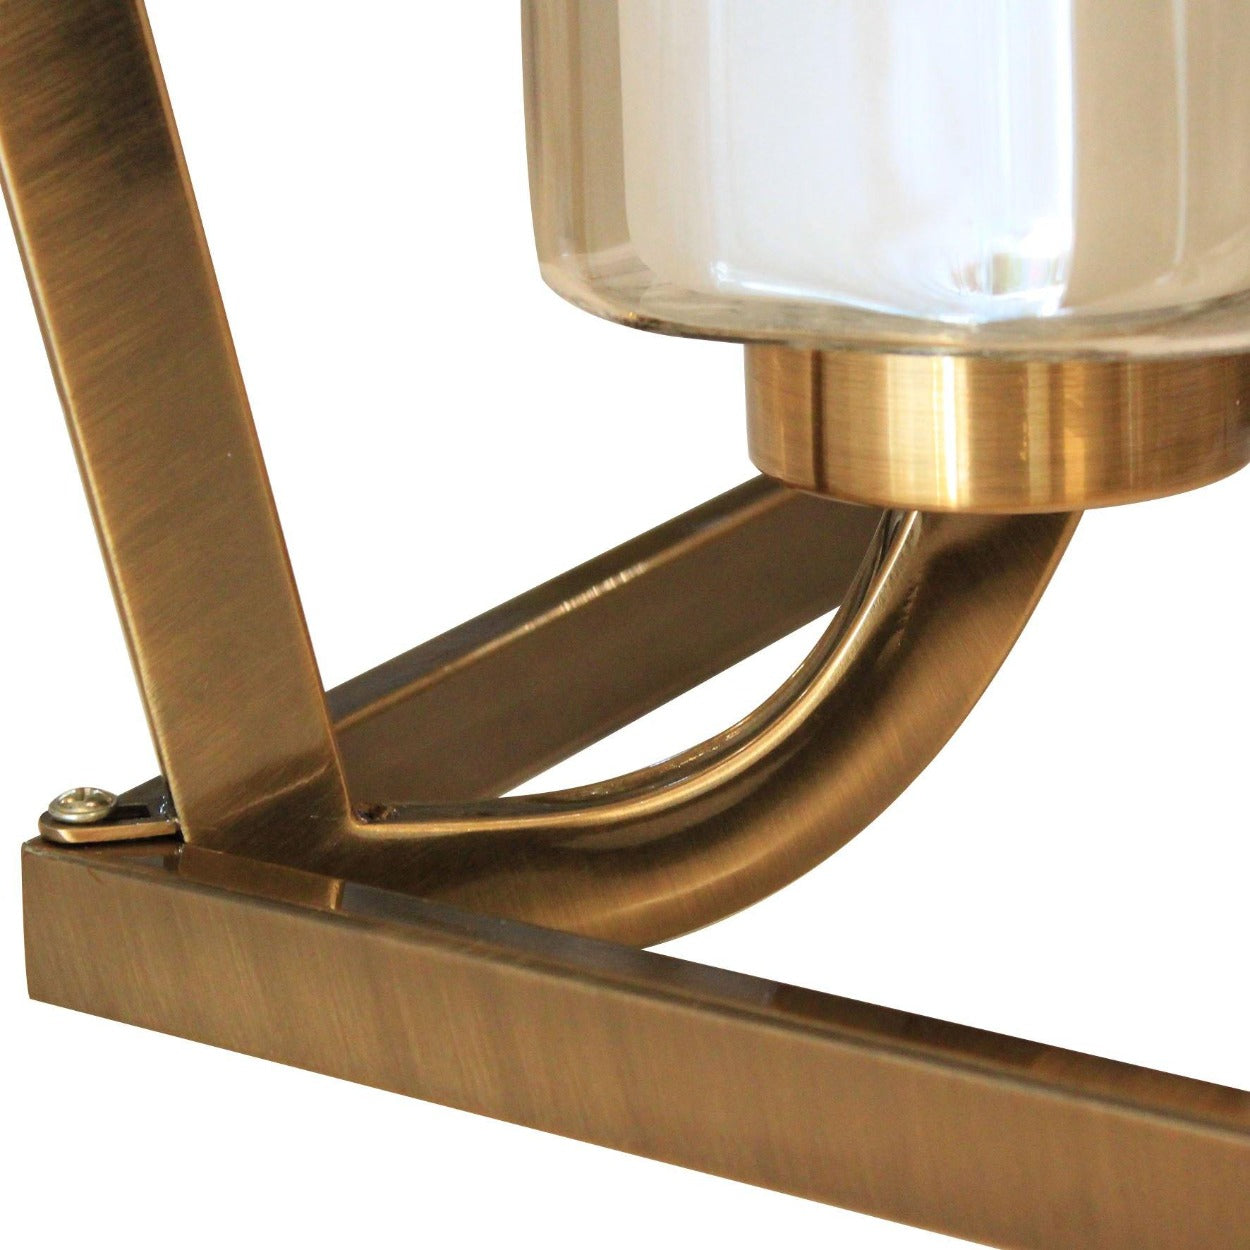 ANKUR SQUARE 4 LAMP CASA ANTIQUE BRASS METAL WITH GLASS CHANDELIER - Ankur Lighting